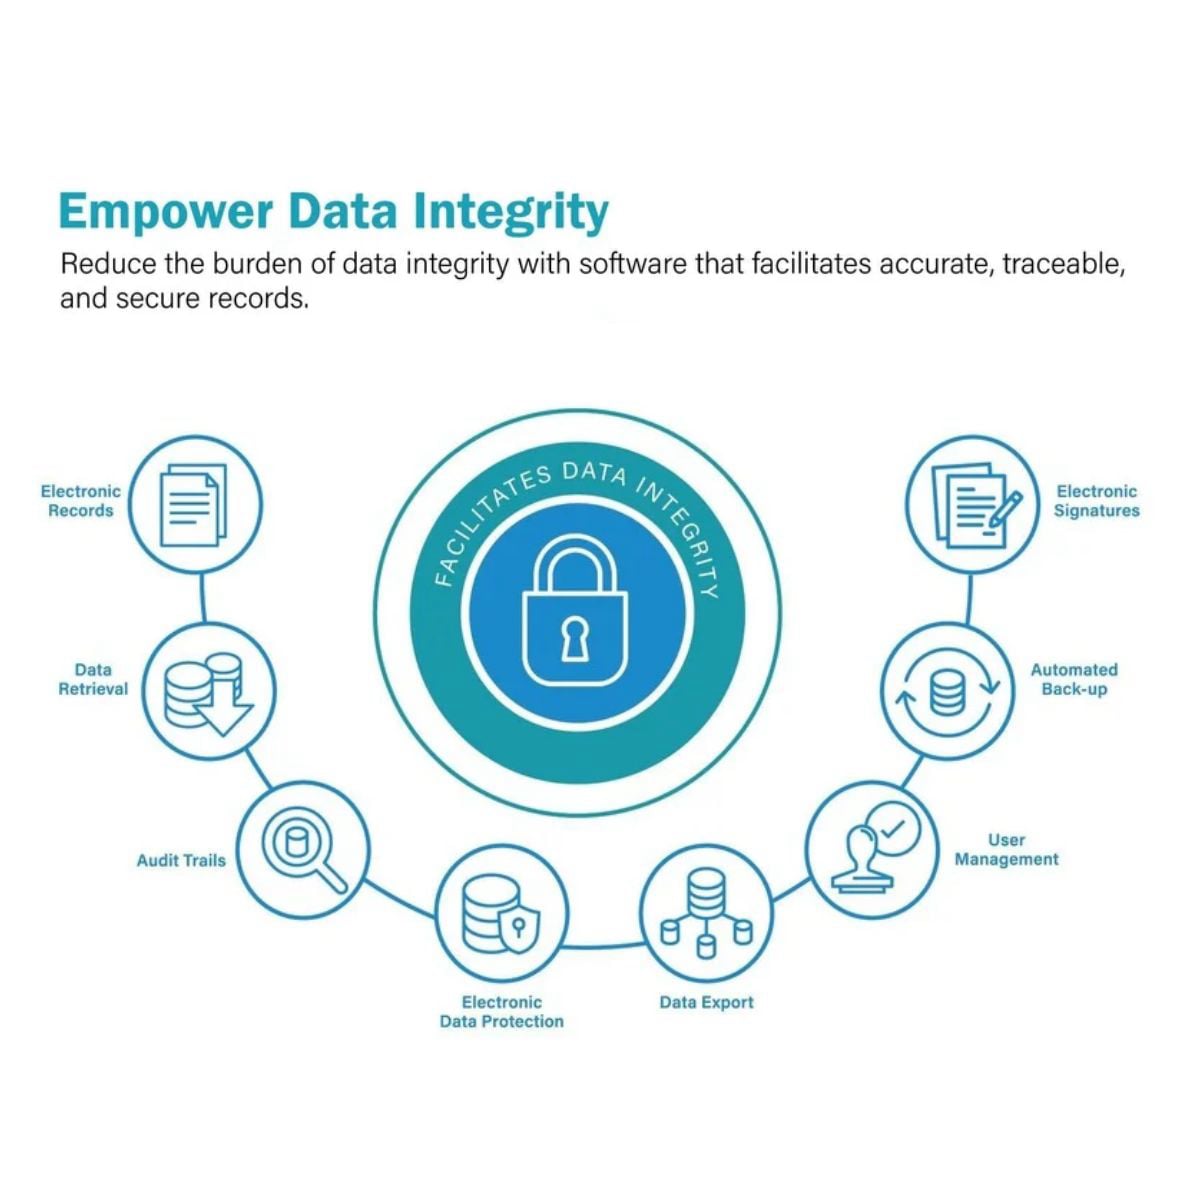 Empower Data Integrity